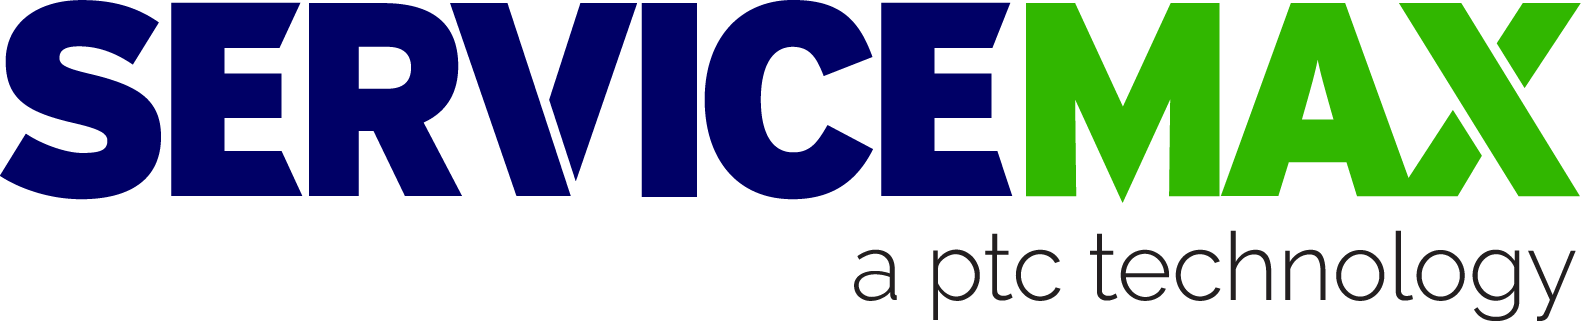 Servicemax Ptc Logo MAIN (1)